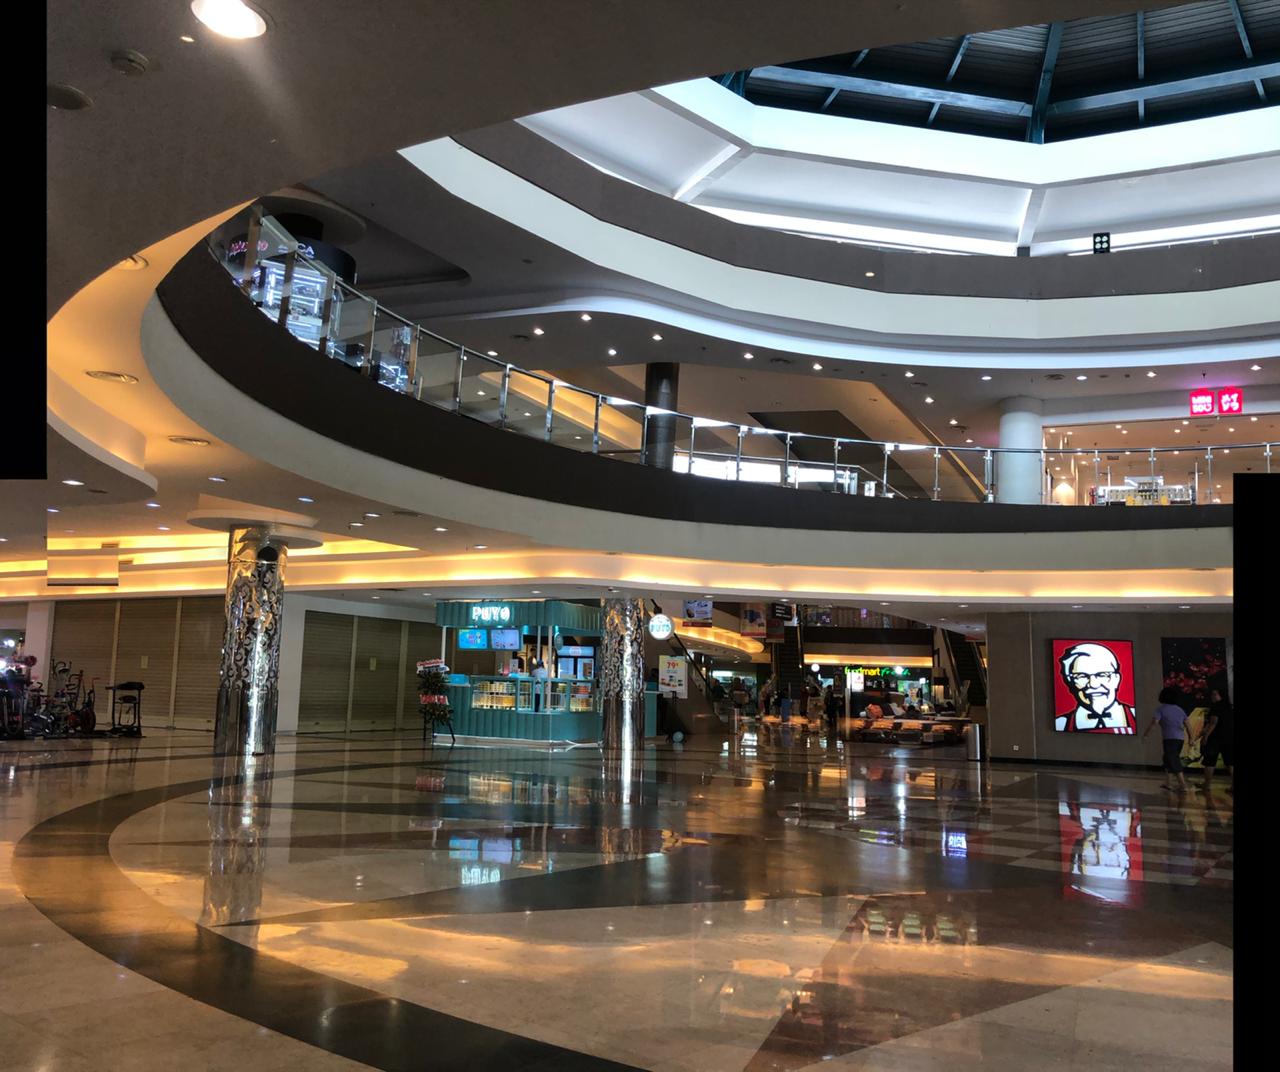 Mall di Cirebon Tutup, Tapi Akses ke Restoran dan Supermarket Tetap Buka, Begini Ketentuannya